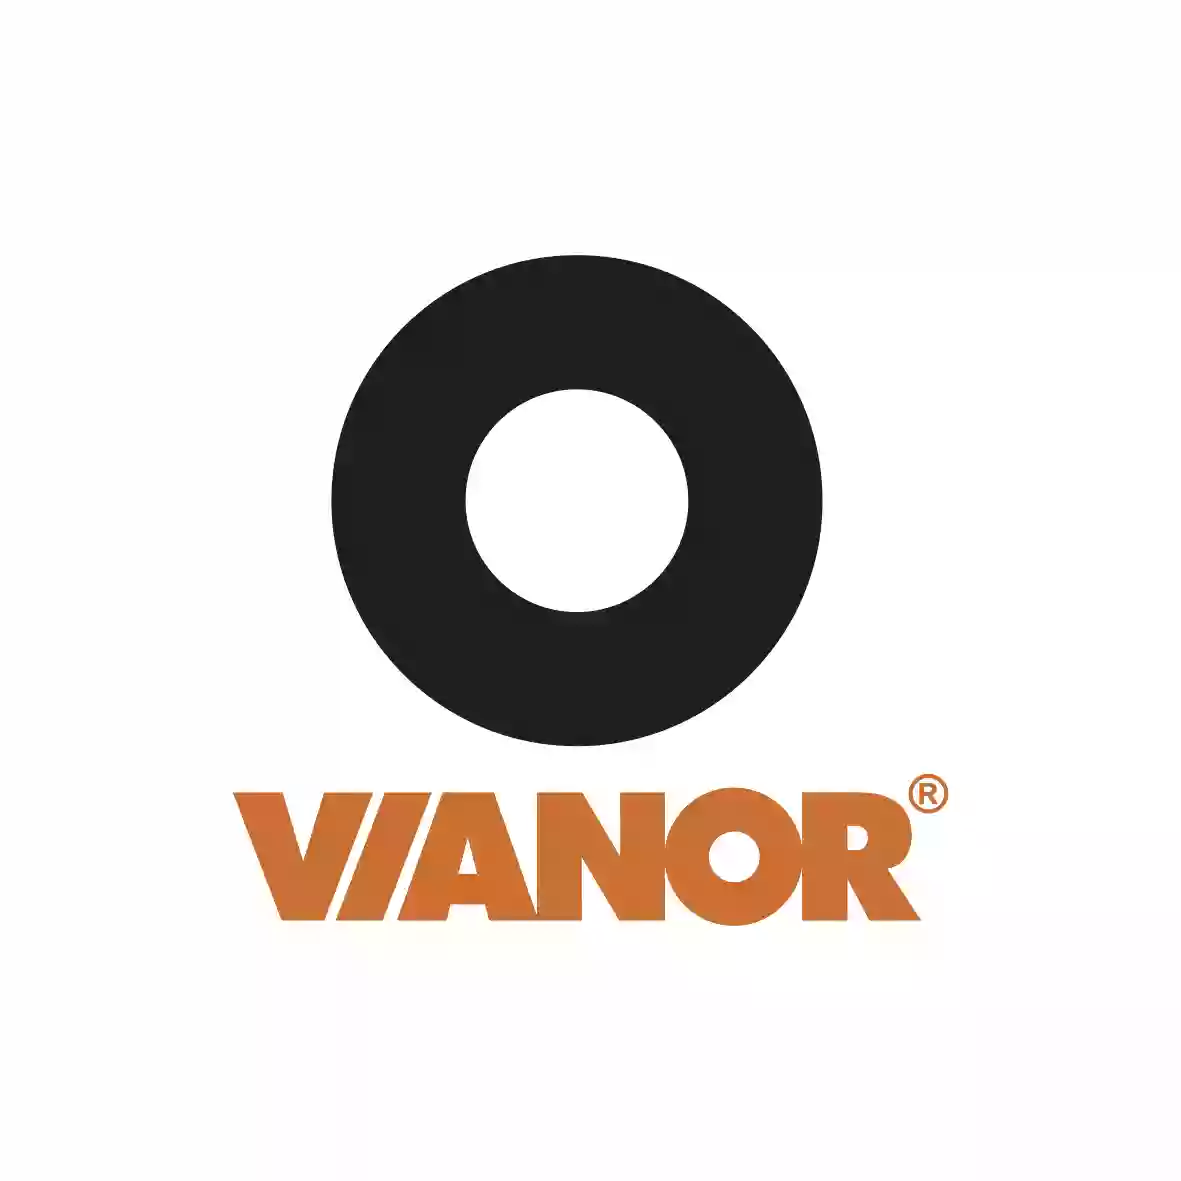 Vianor Express